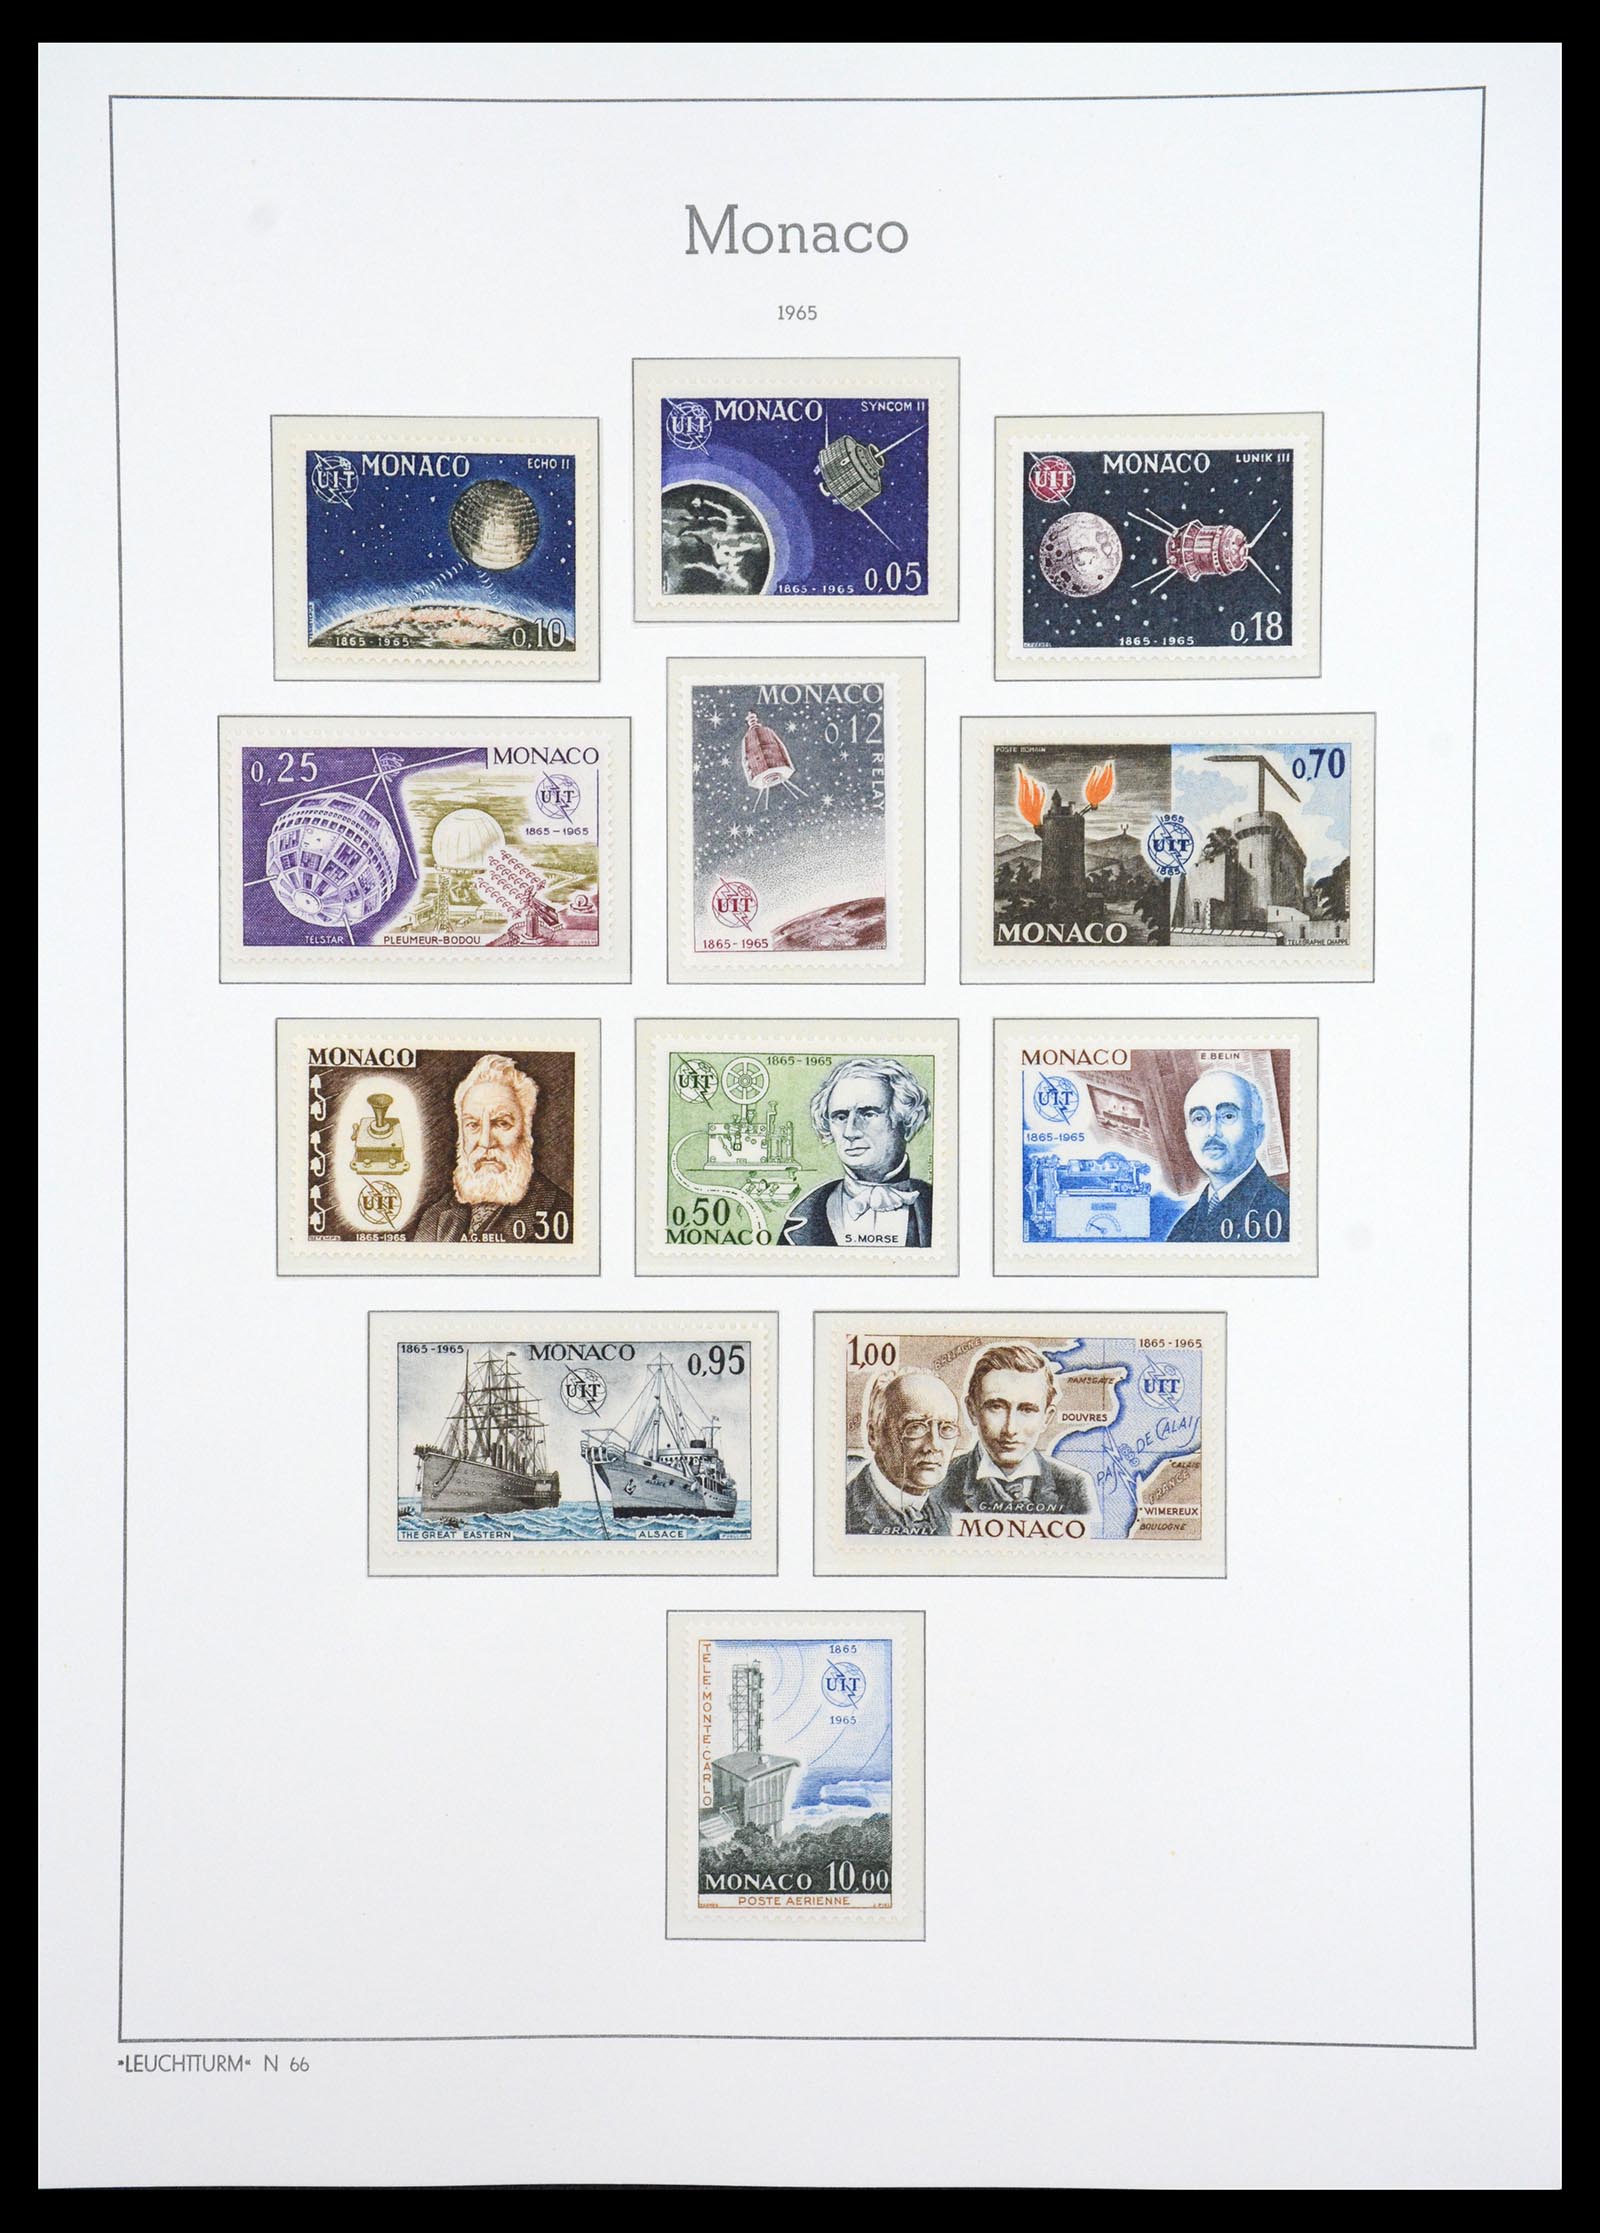 36735 090 - Stamp collection 36735 Monaco 1885-1966.